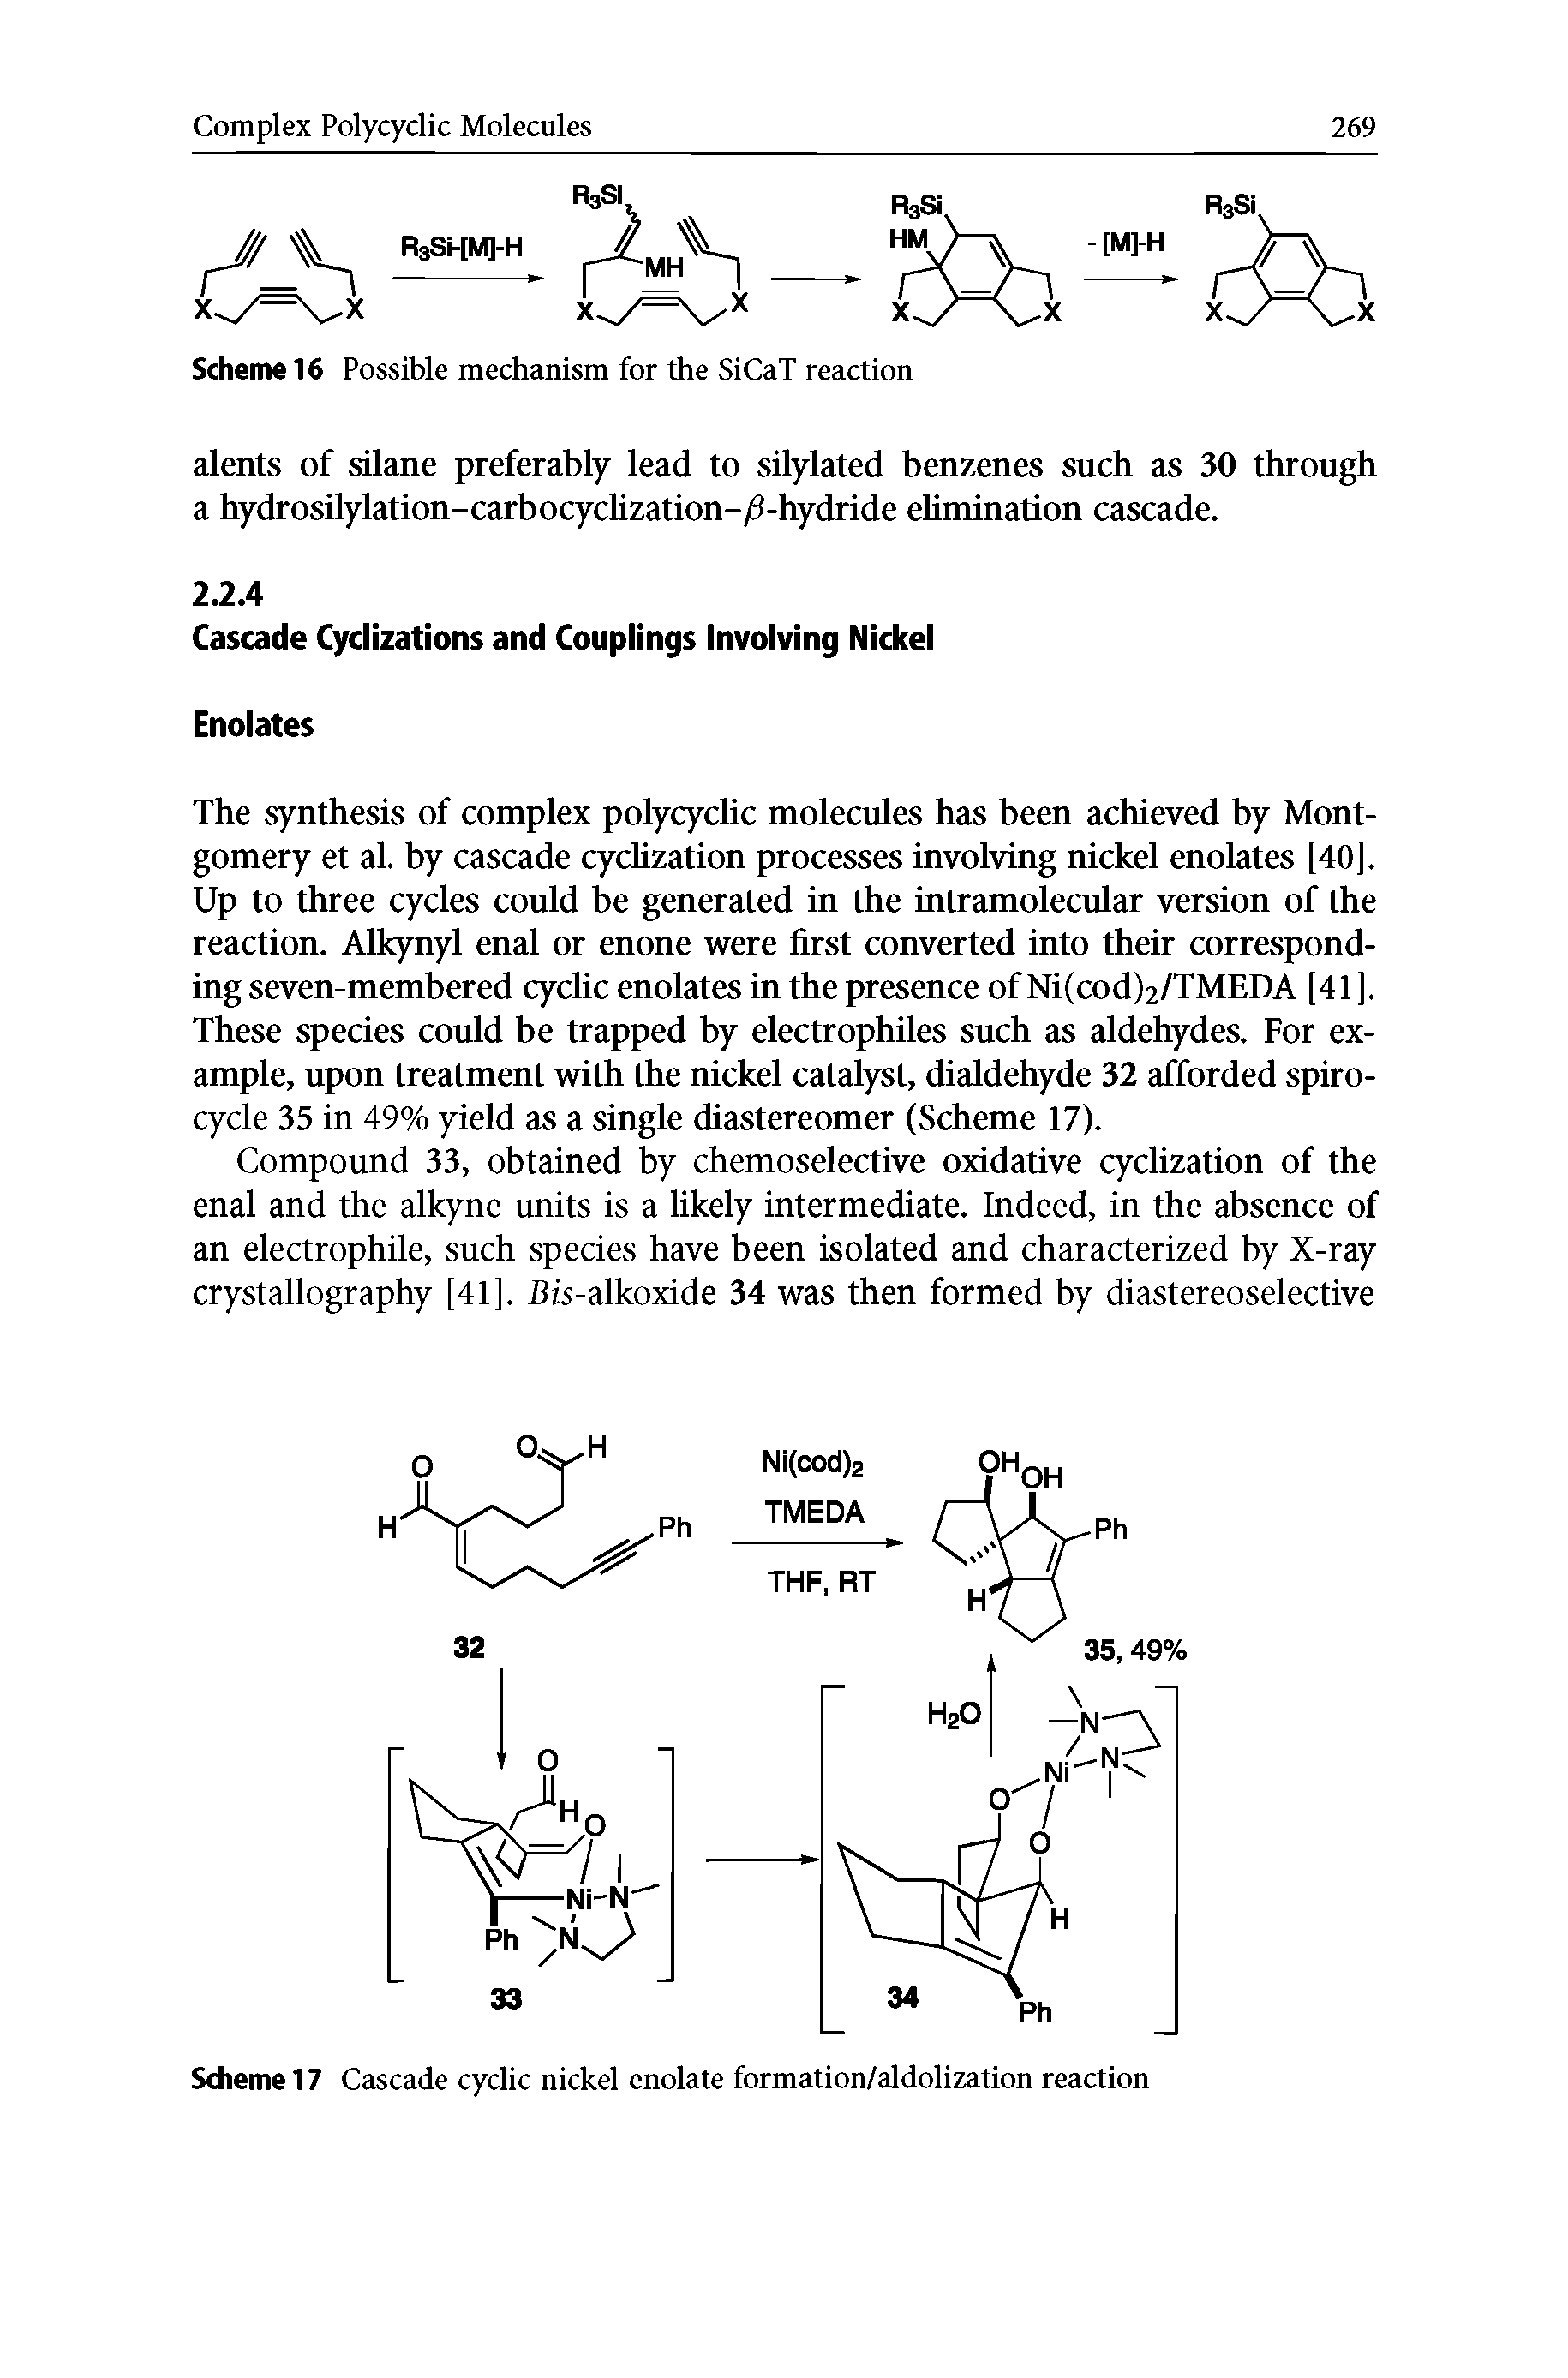 Scheme 17 Cascade cyclic nickel enolate formation/aldolization reaction...